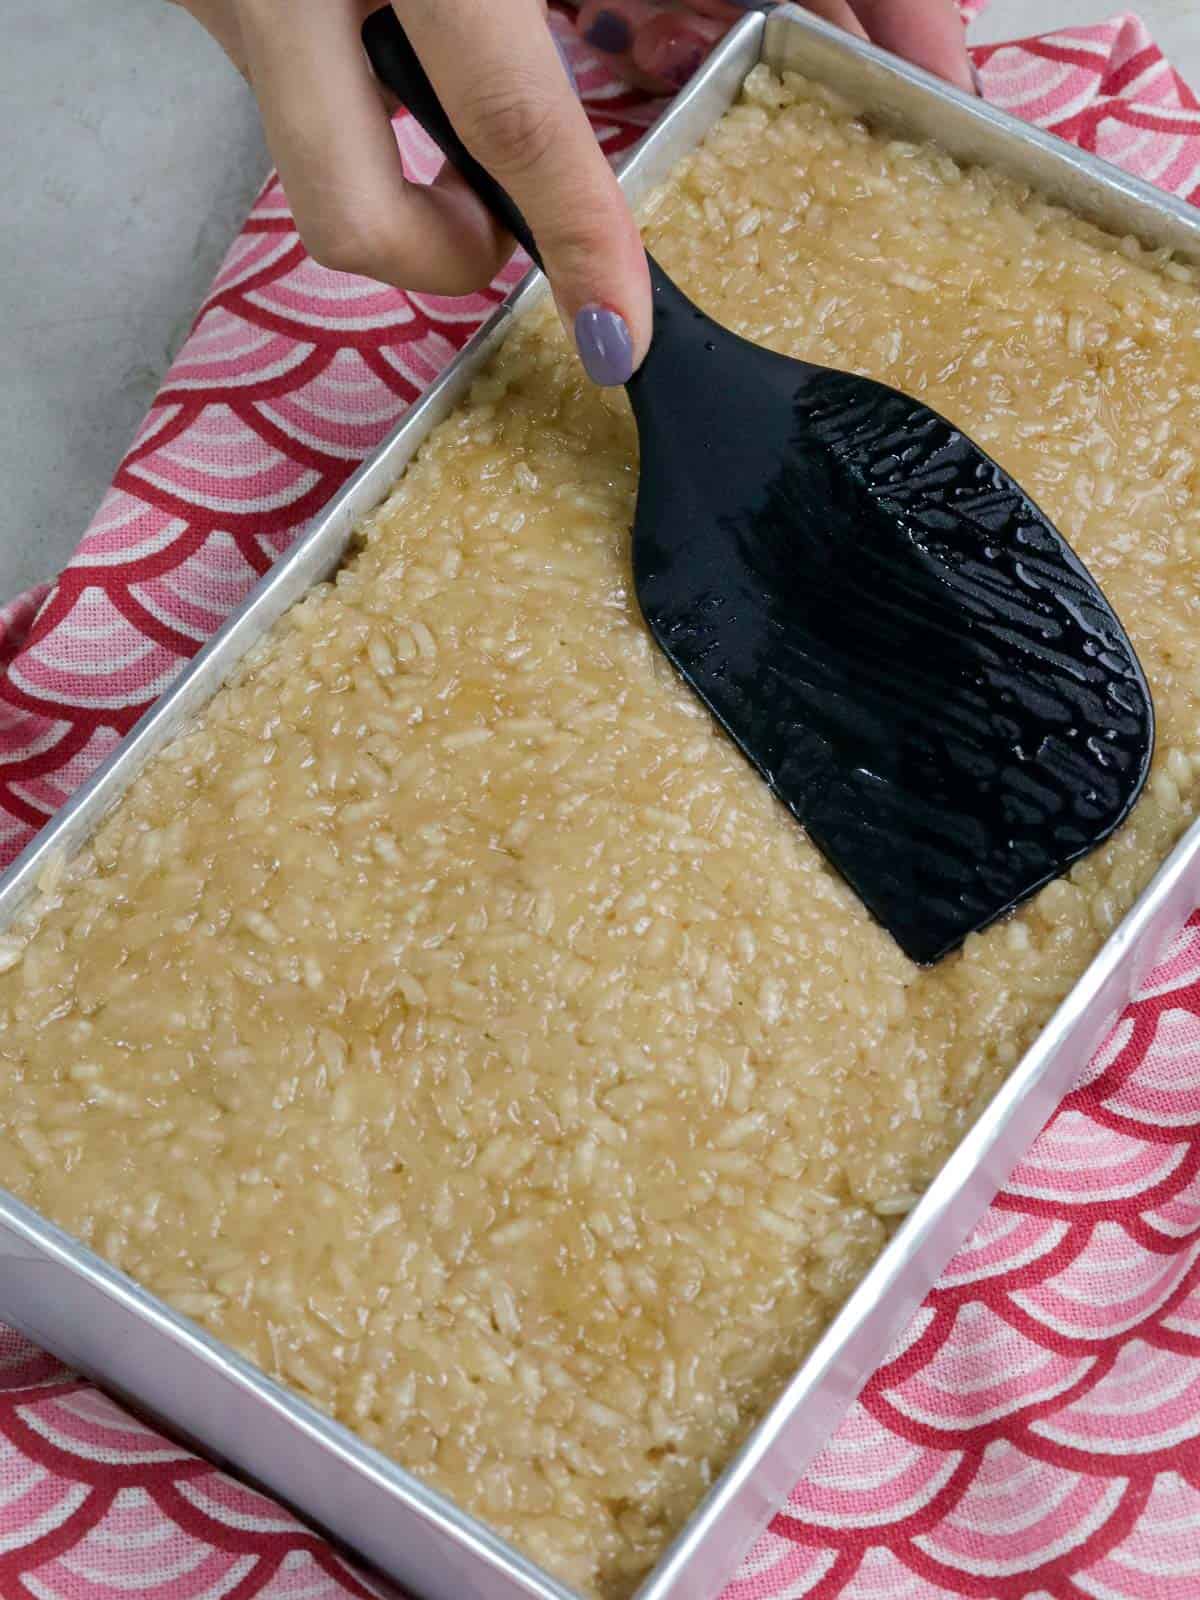 placing cooked biko in a rectangular pan